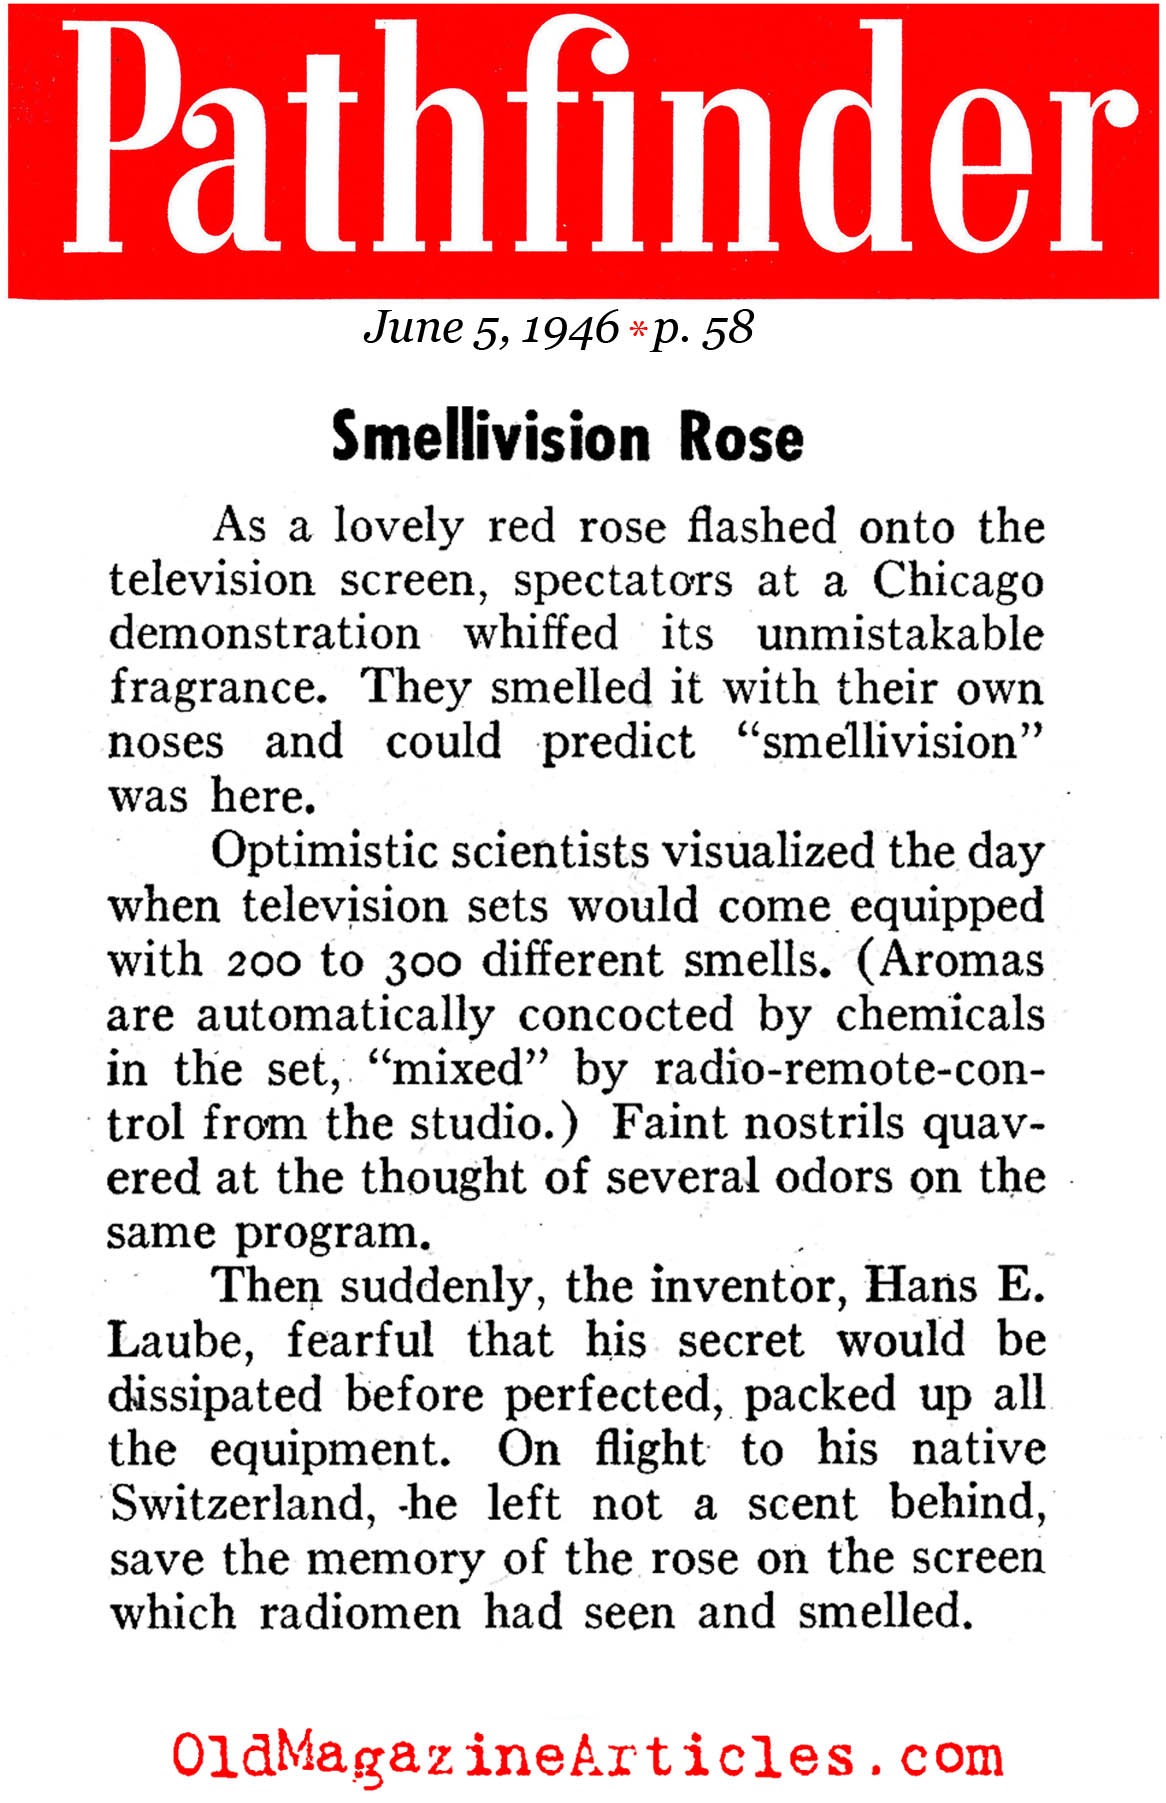 Smellivision Arrives (Pathfinder Magazine, 1946)